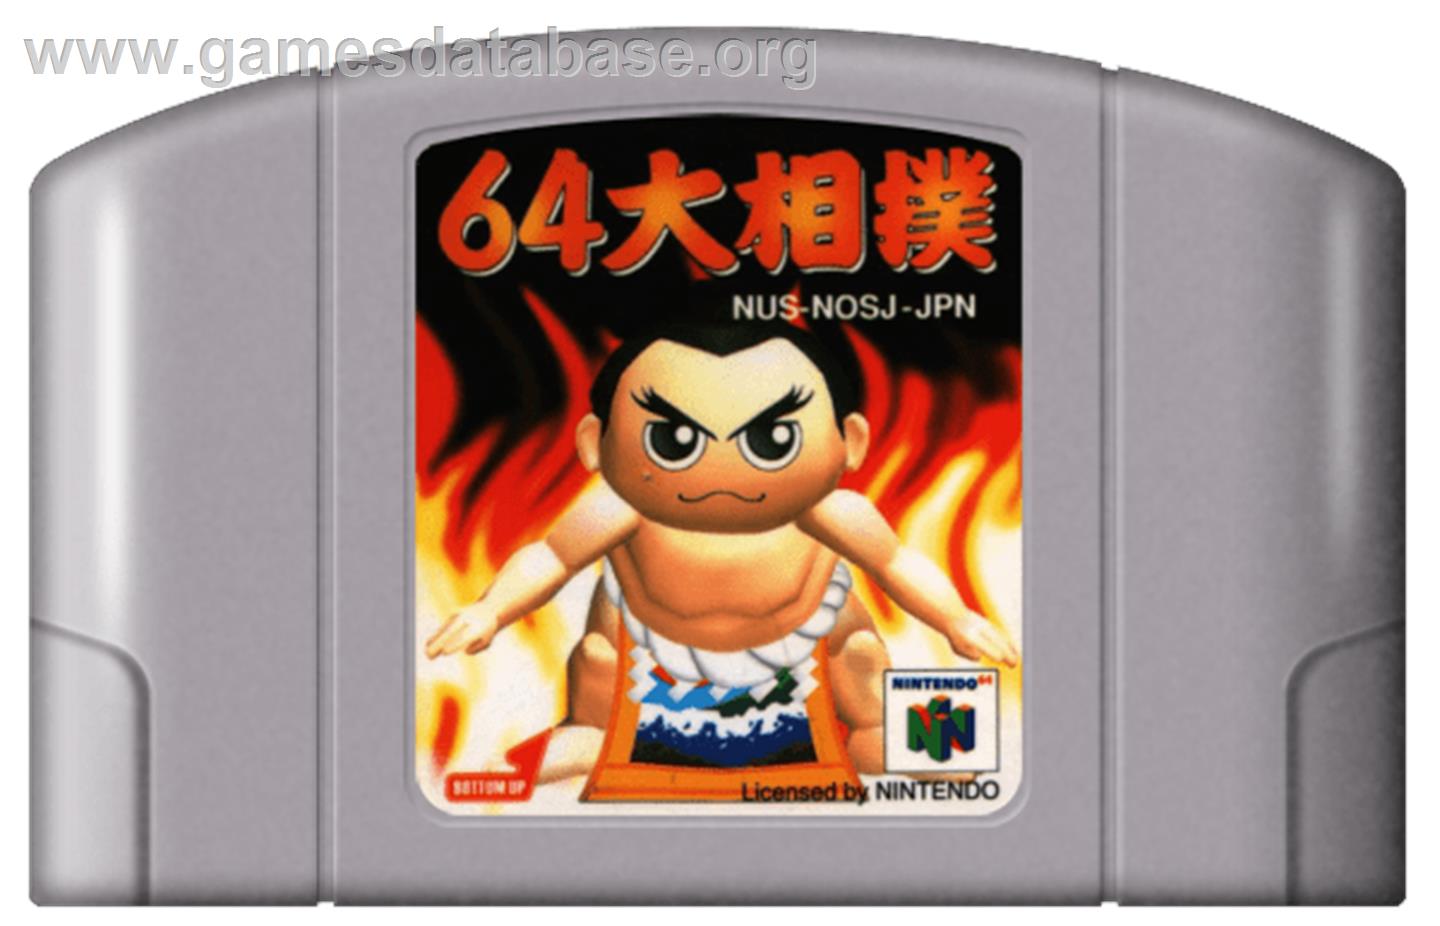 64 Oozumou - Nintendo N64 - Artwork - Cartridge